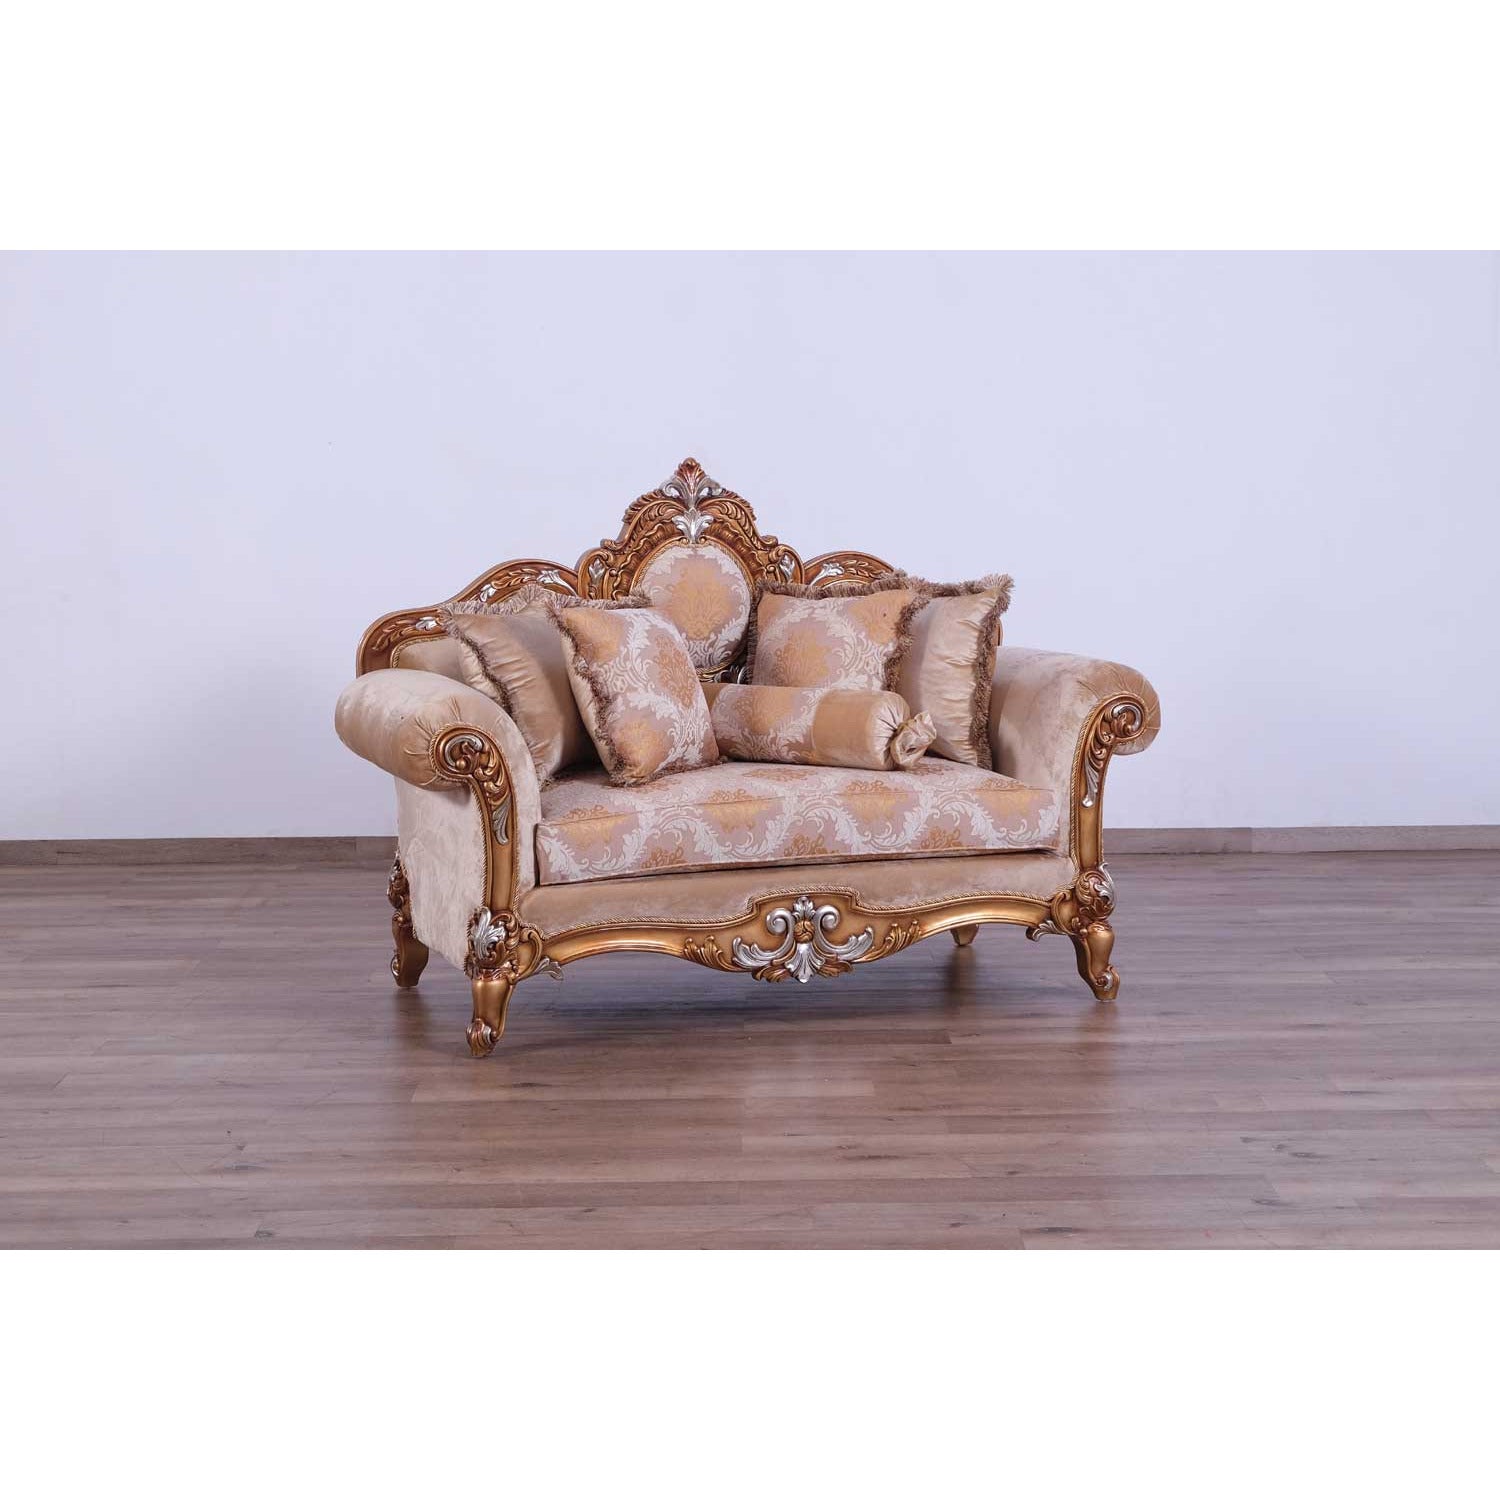 European Furniture - Raffaello 3 Piece Living Room Set in Beige Gold - 41026-3SET - New Star Living